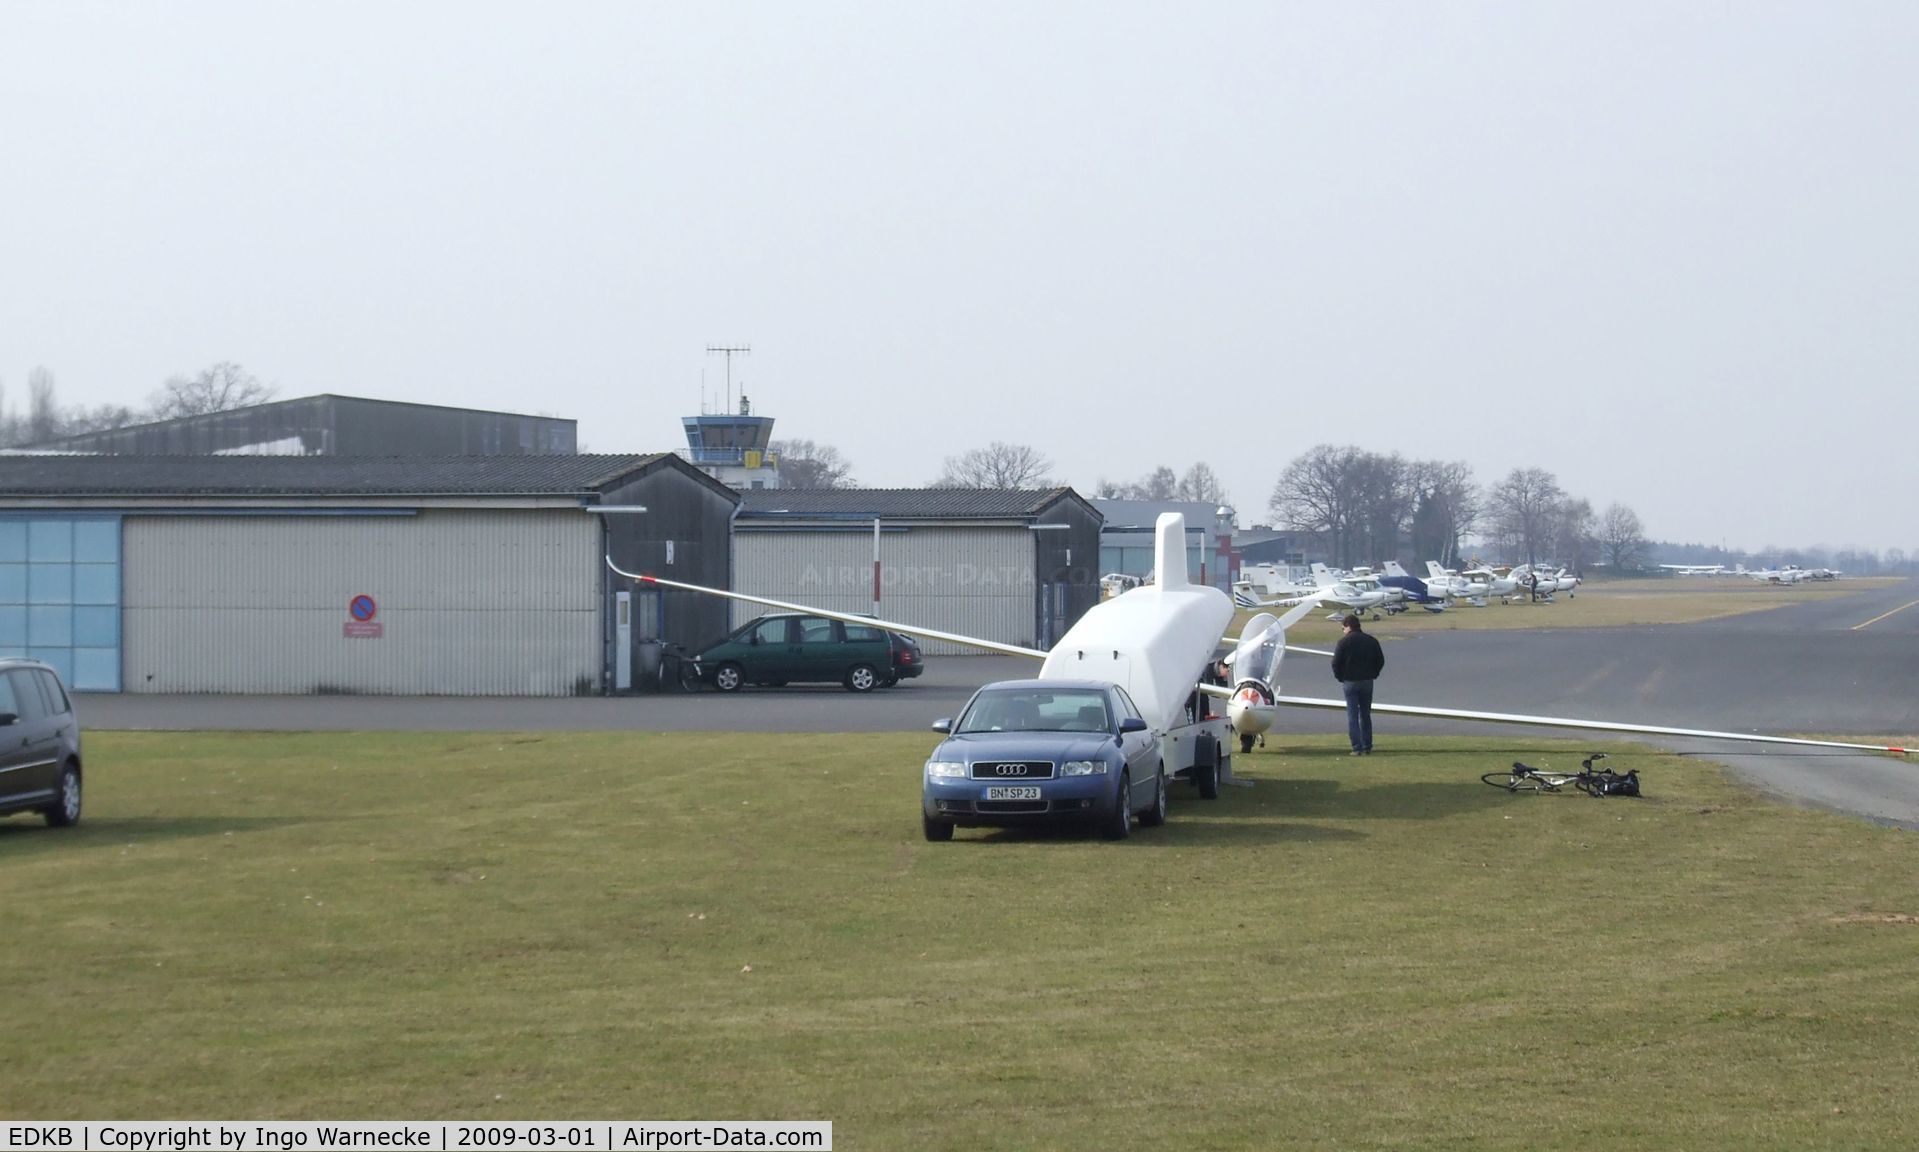 Bonn-Hangelar Airport, Sankt Augustin Germany (EDKB) - hangars in the south-eastern part